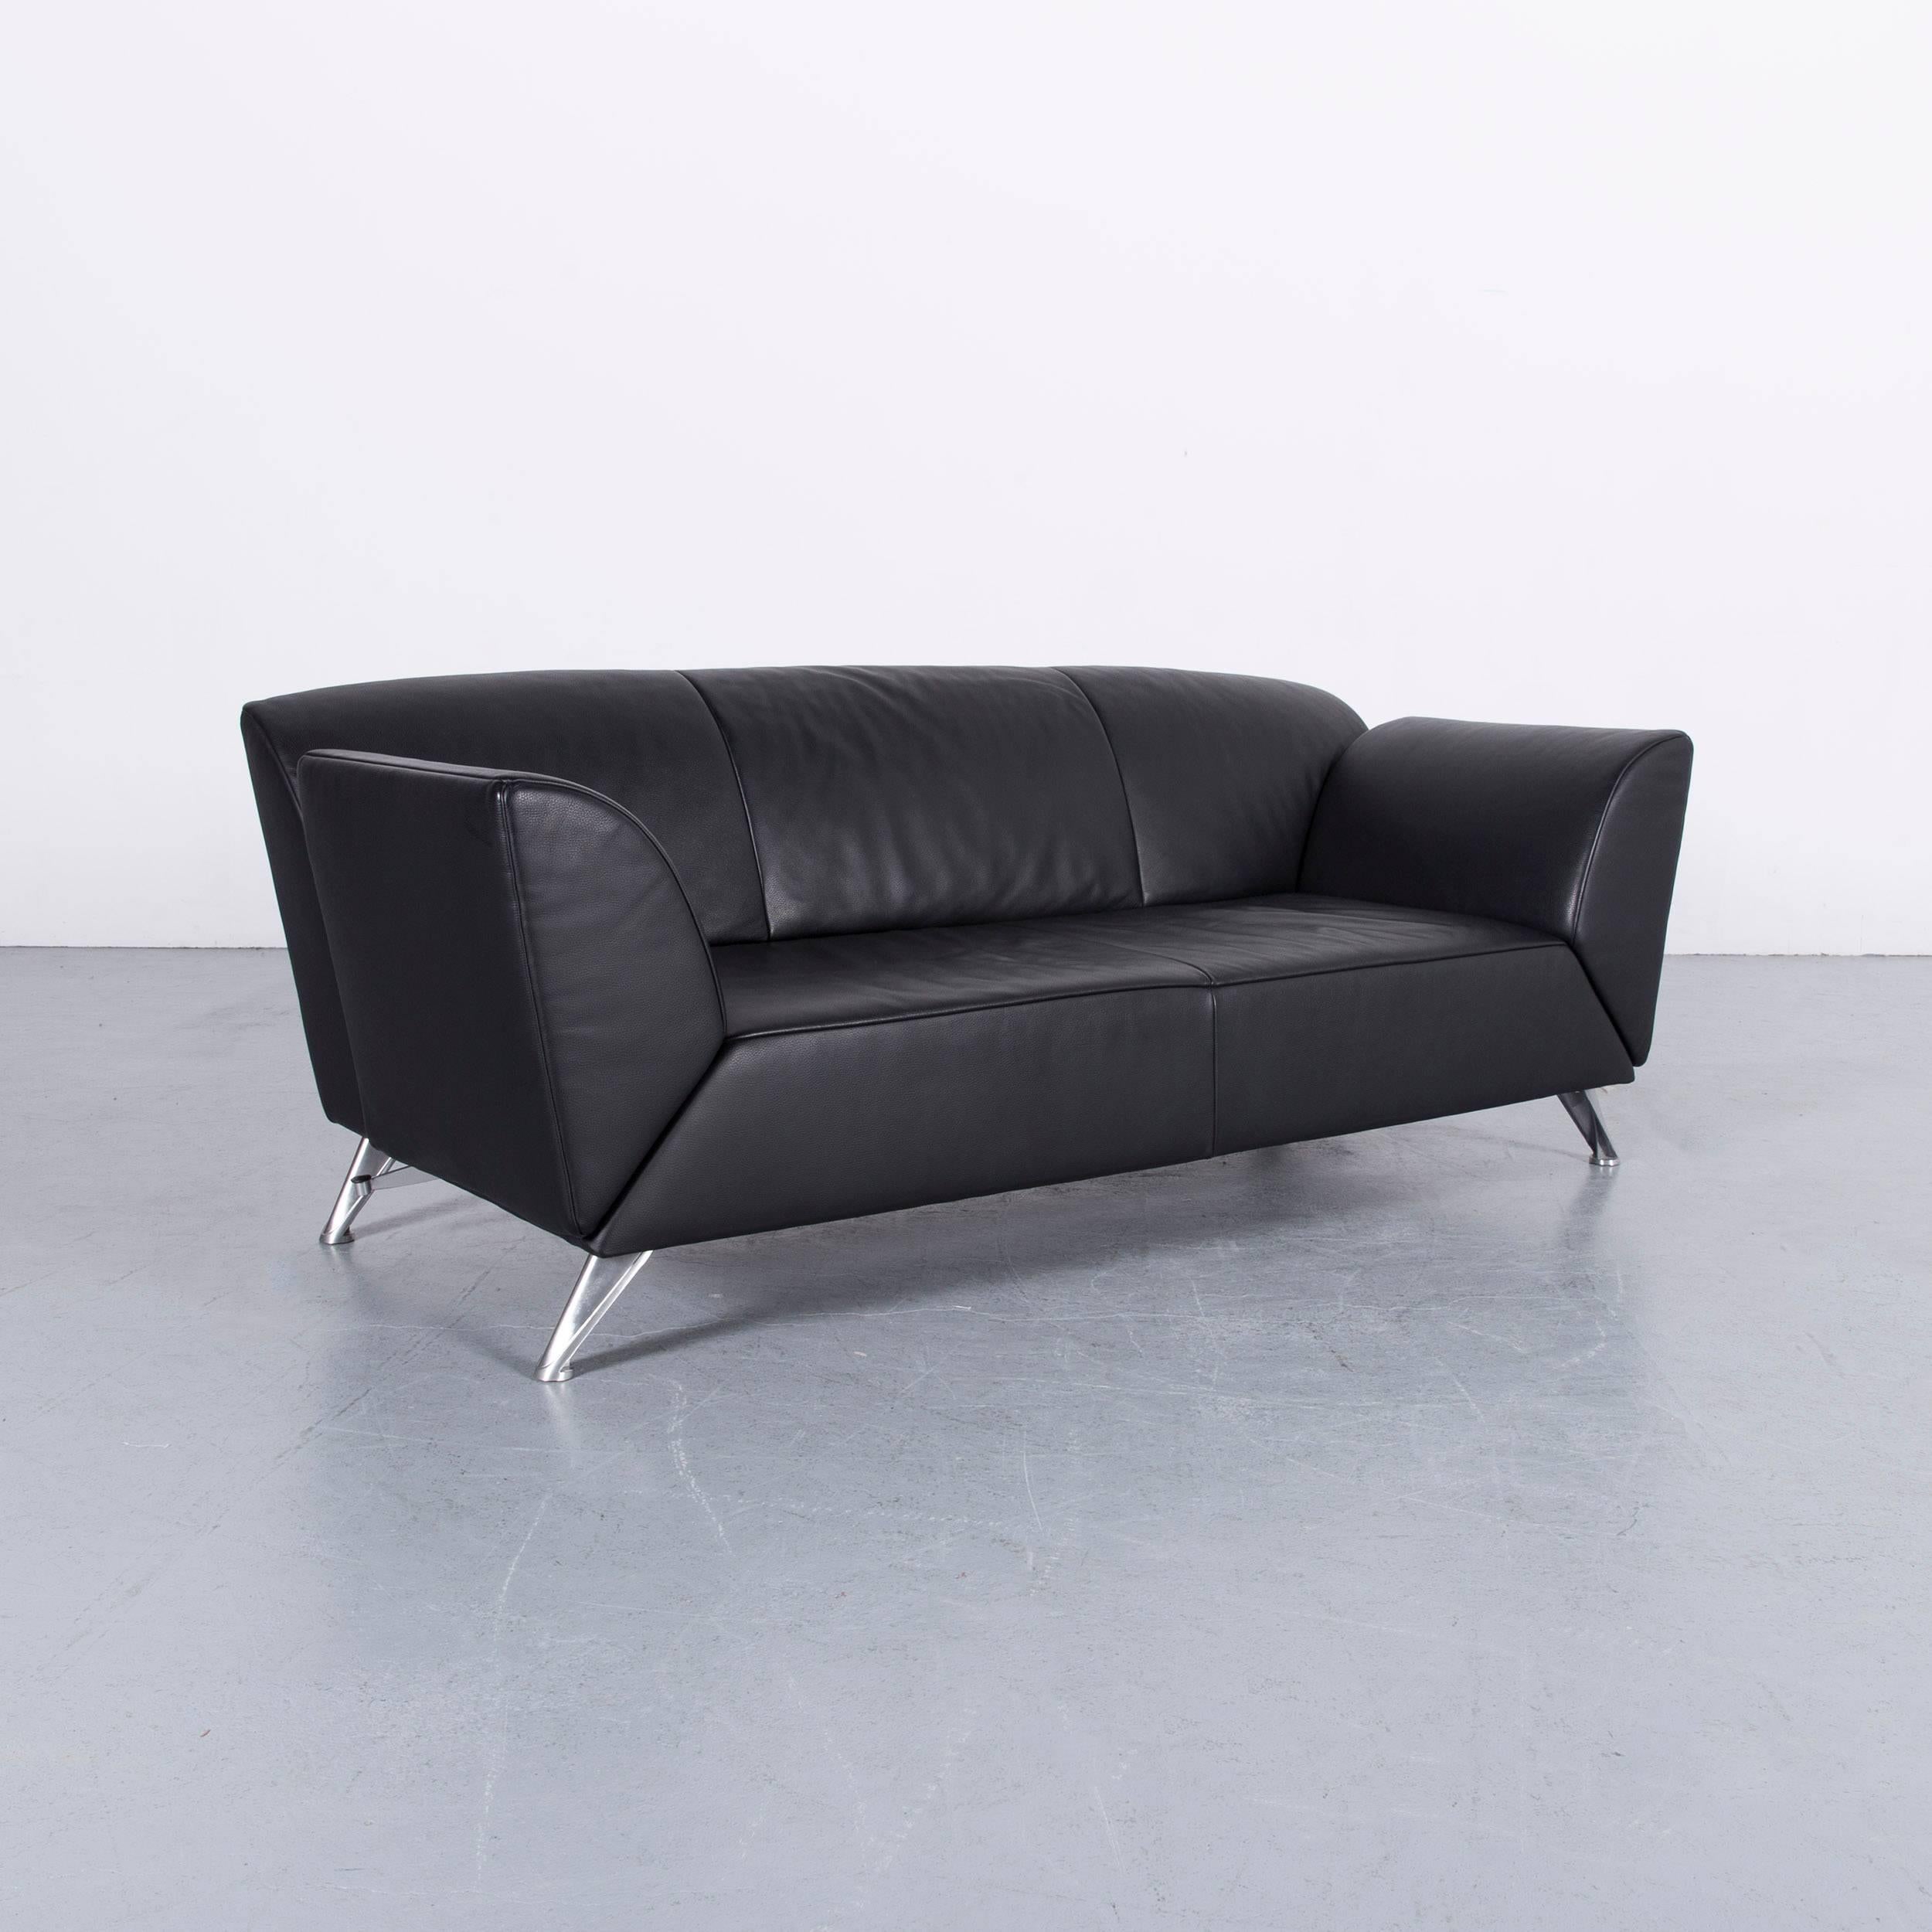 Jori JR 9700 Leather Sofa Black Three-Seat Couch 3